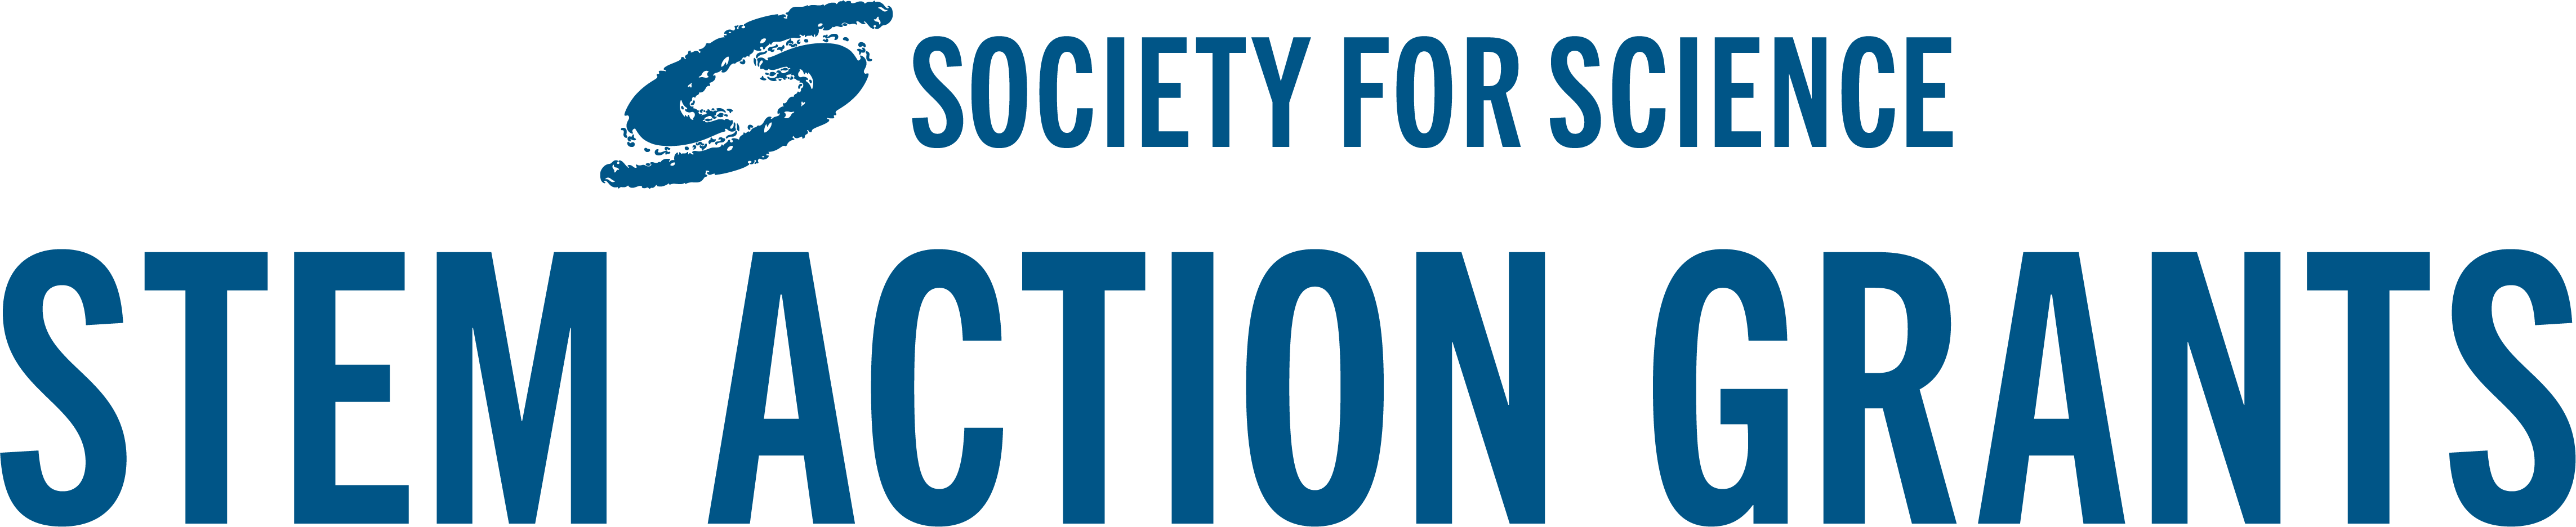 Society For Science - STEM Action Grants Logo